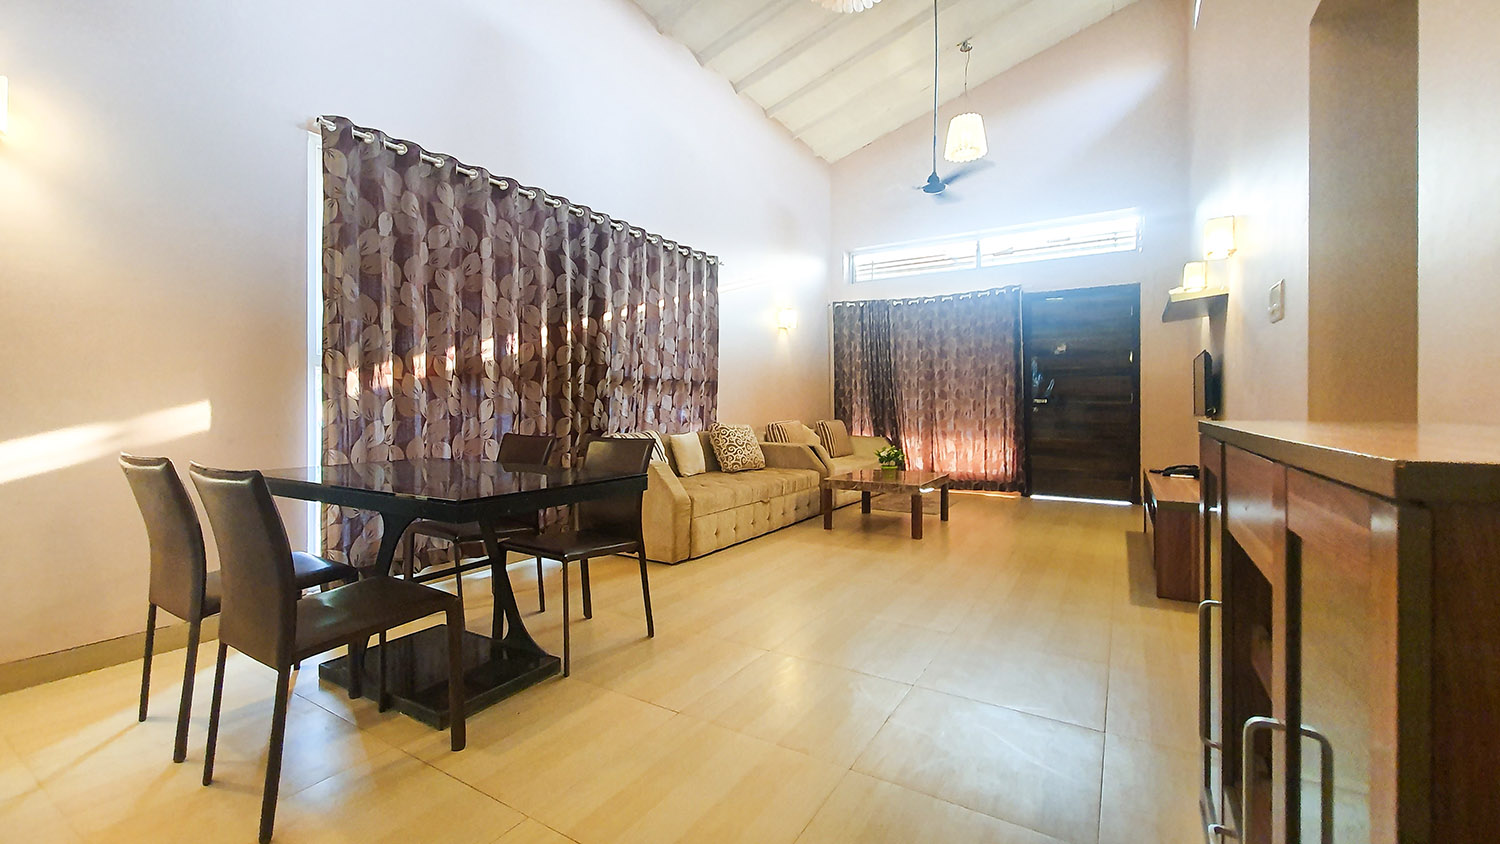 Best Villas in Igatpuri for Couples near Mumbai | Rainforest Resort and Spa, Igatpuri, Nashik